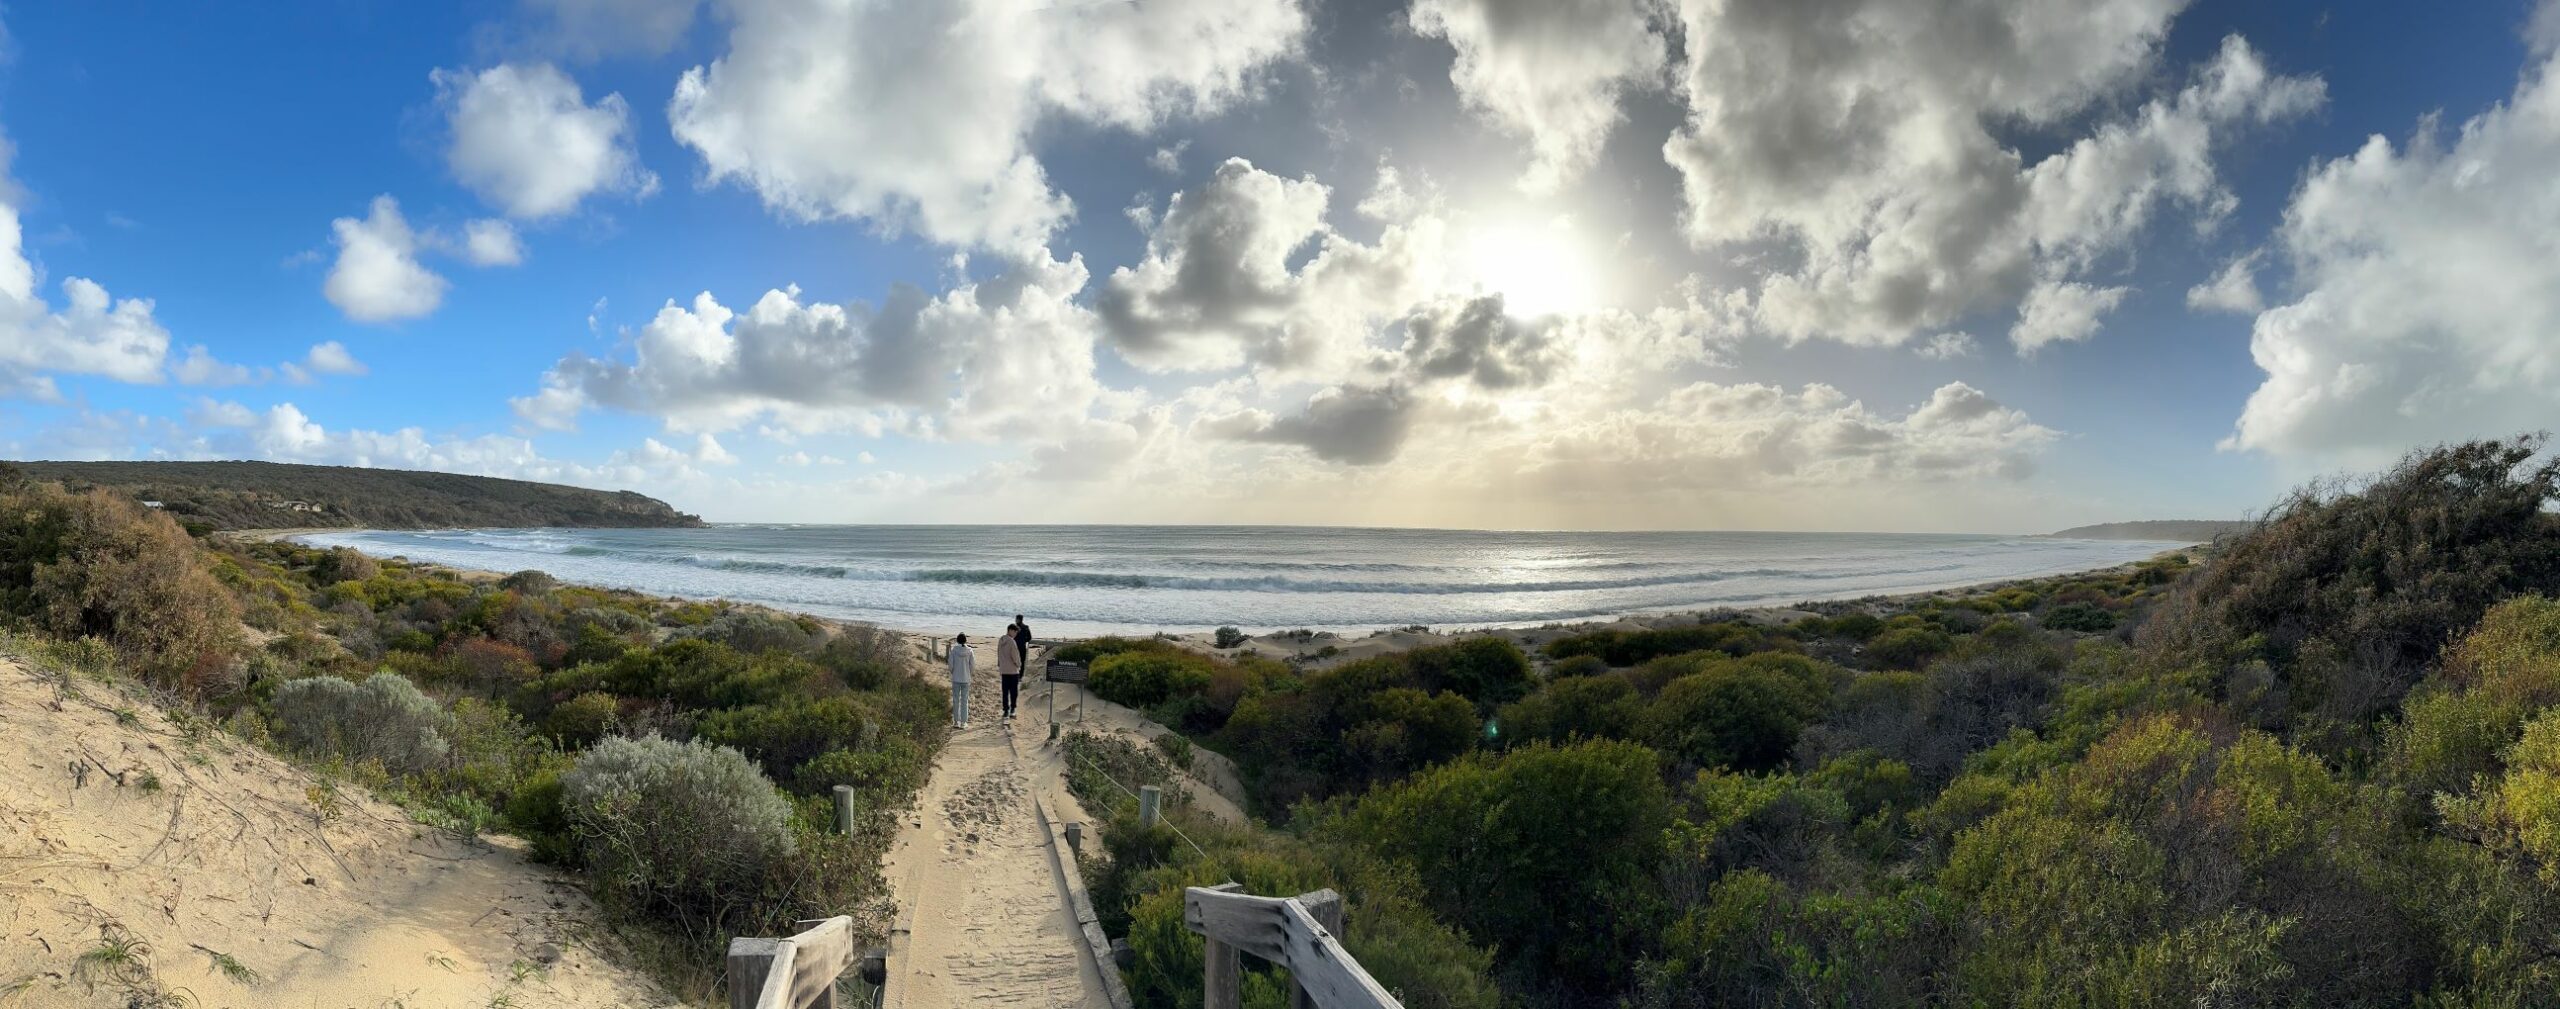 Beach front, Banbury, Western Australia